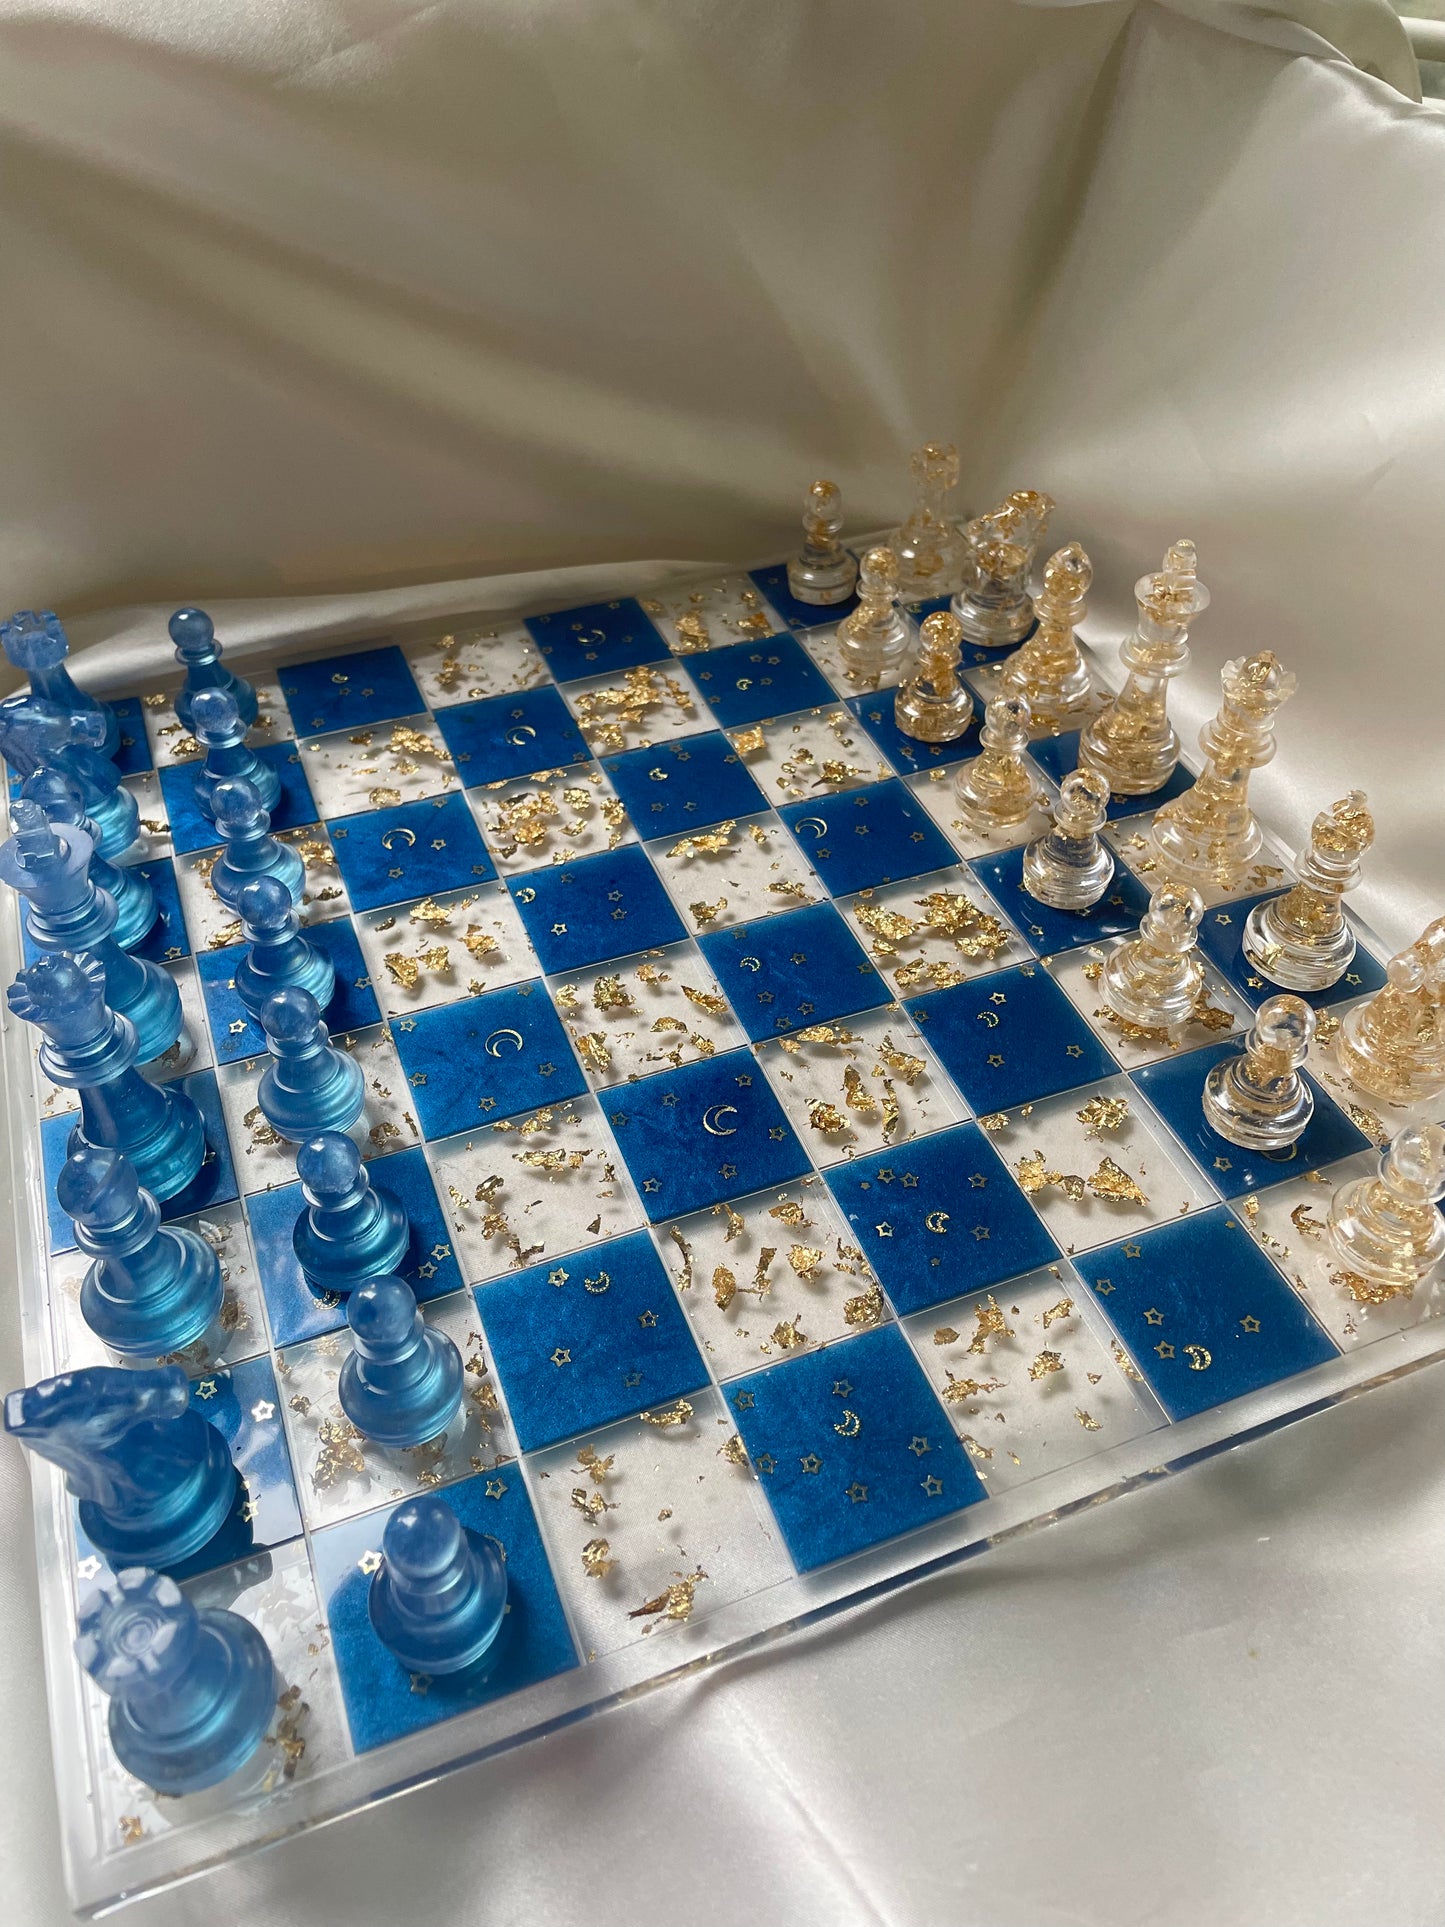 PRE-ORDER 13x13 starry night chessboard